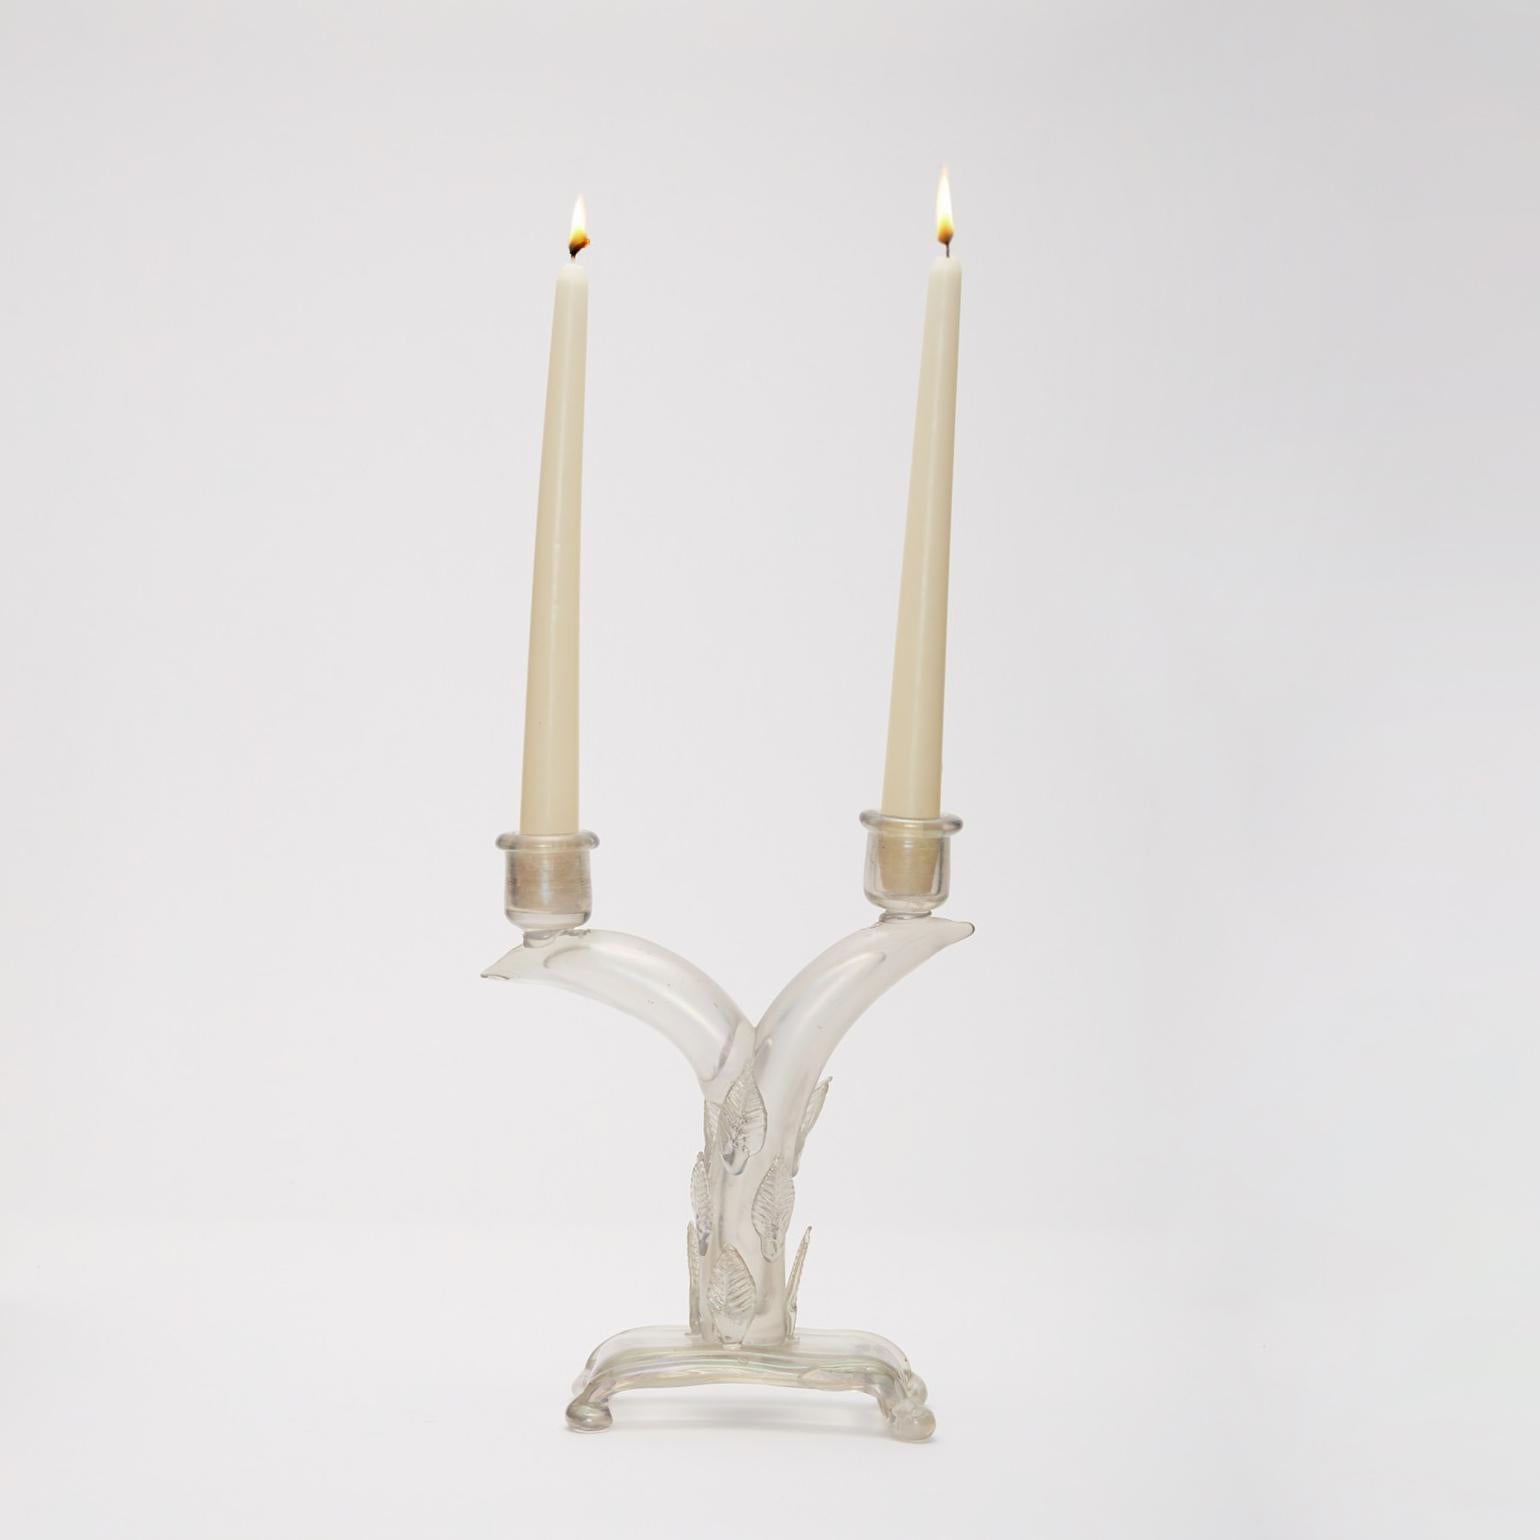 Candlestick for two regular candles in iridized glass by Guido Balsamo Stella (1882-1941) for S.A.I.A.R. Ferro Toso, circa 1925
• Literature
Marina Barovier and Attilia Dorigato, 'Animals in Glass: A Murano Bestiary', Canal & Stamperia Editrice,